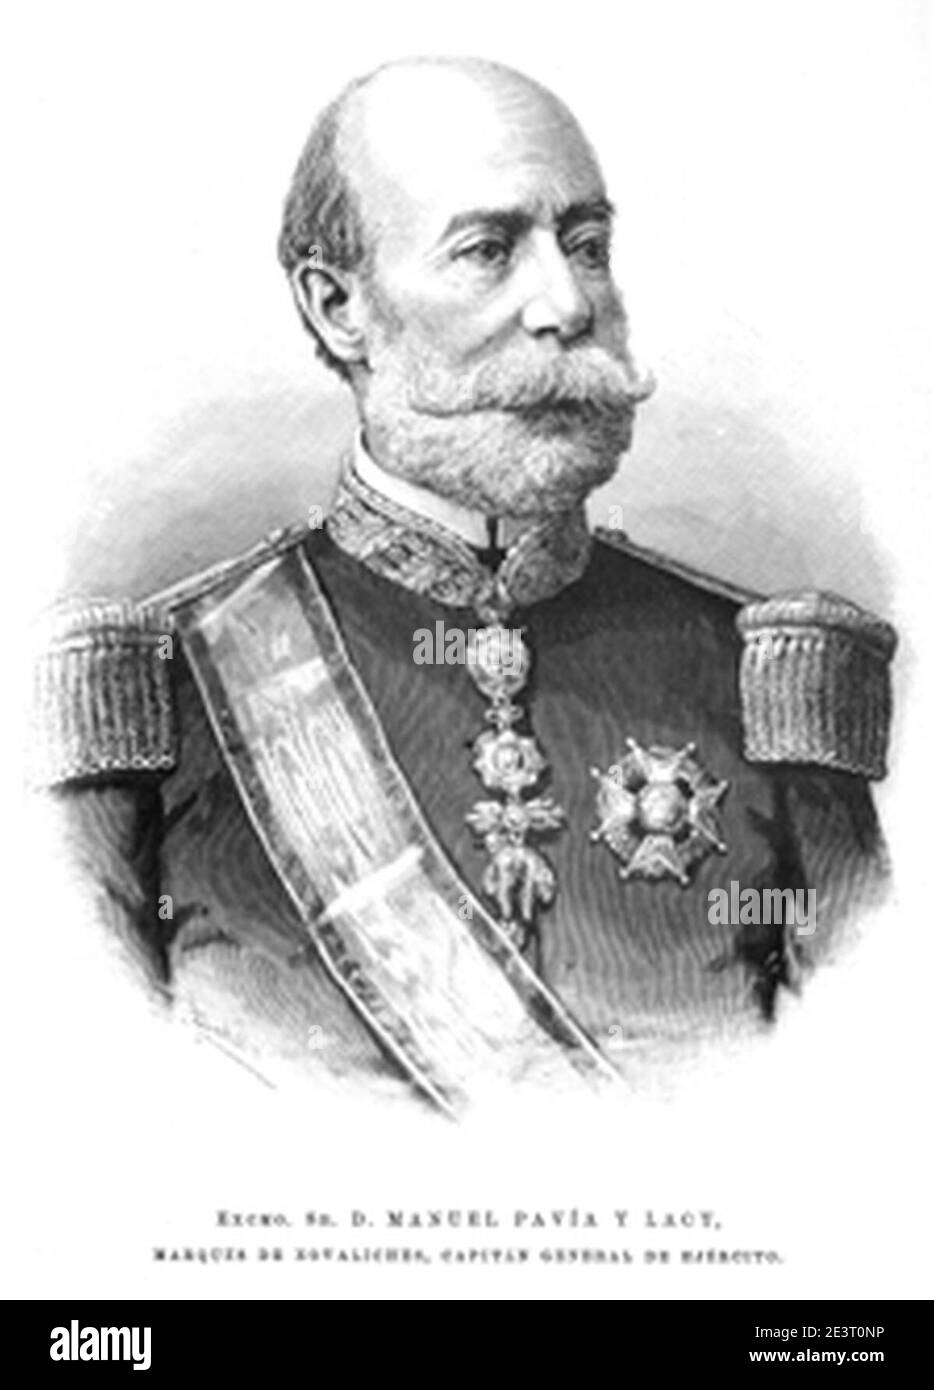 Manuel Pavía y Lacy, 1° marchese di Novaliches. Foto Stock